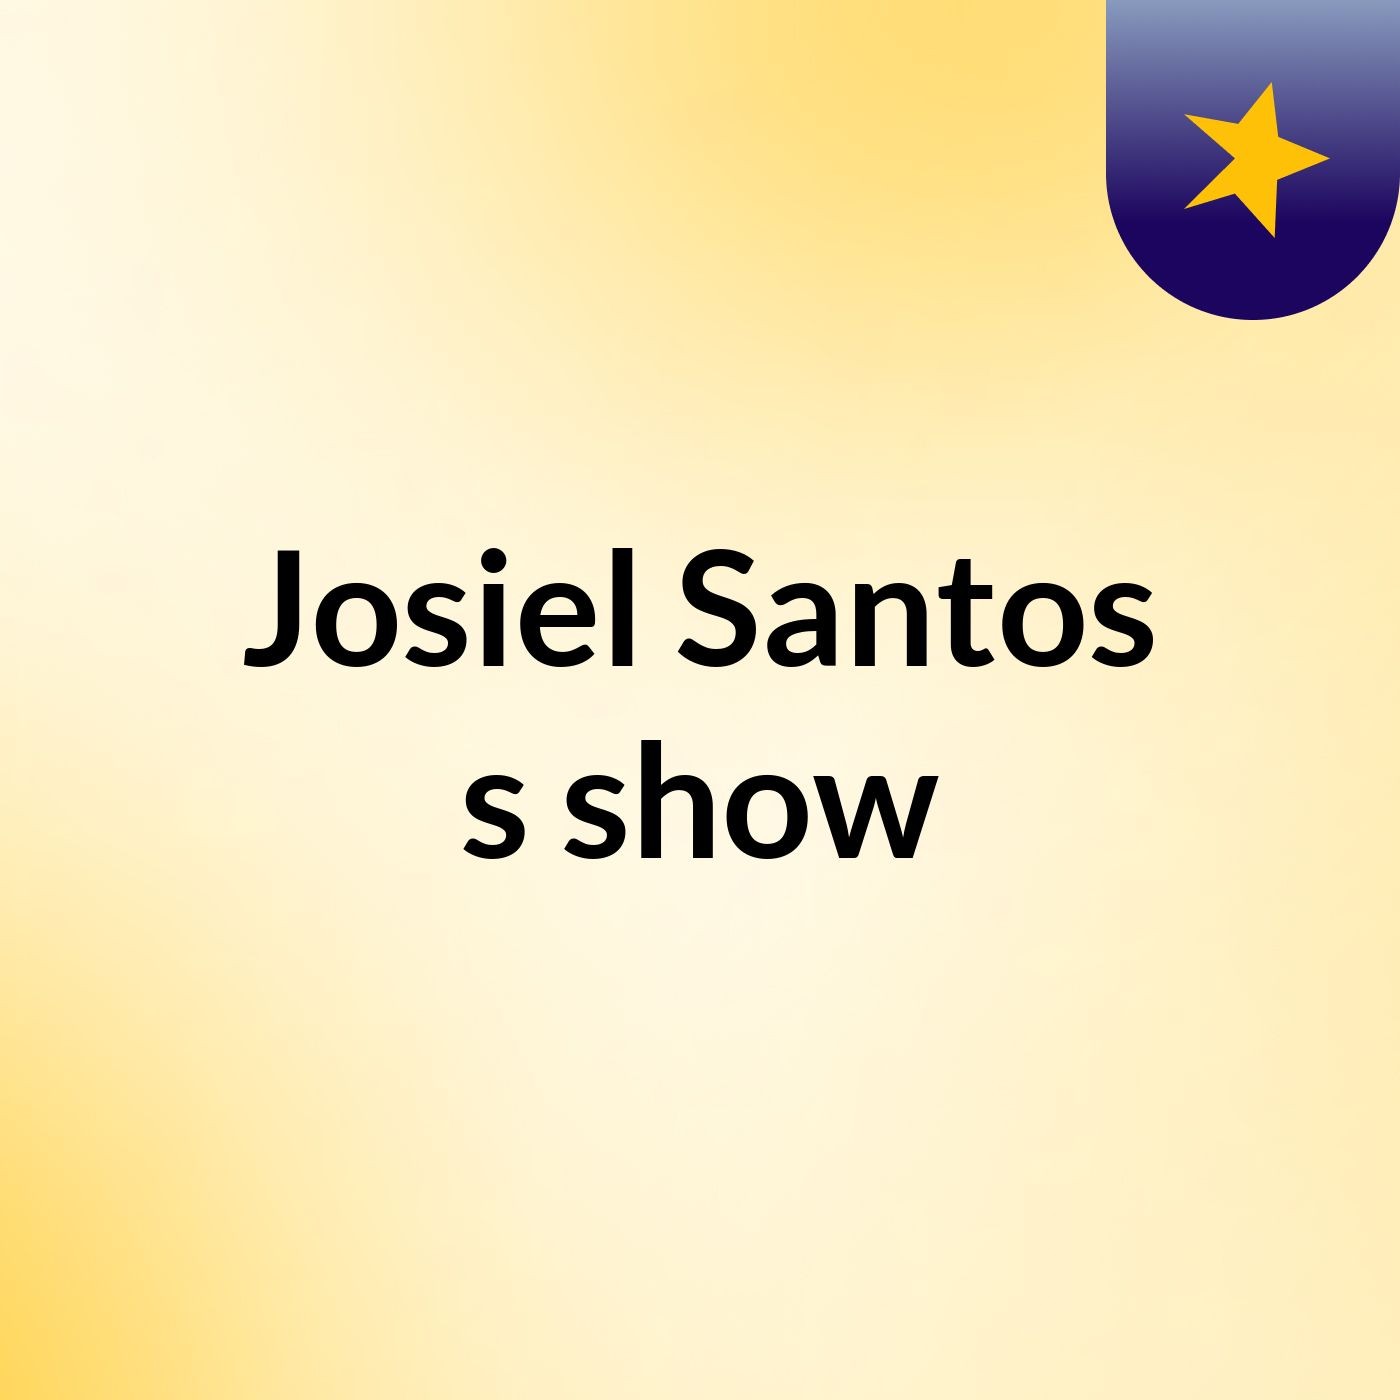 Josiel Santos's show